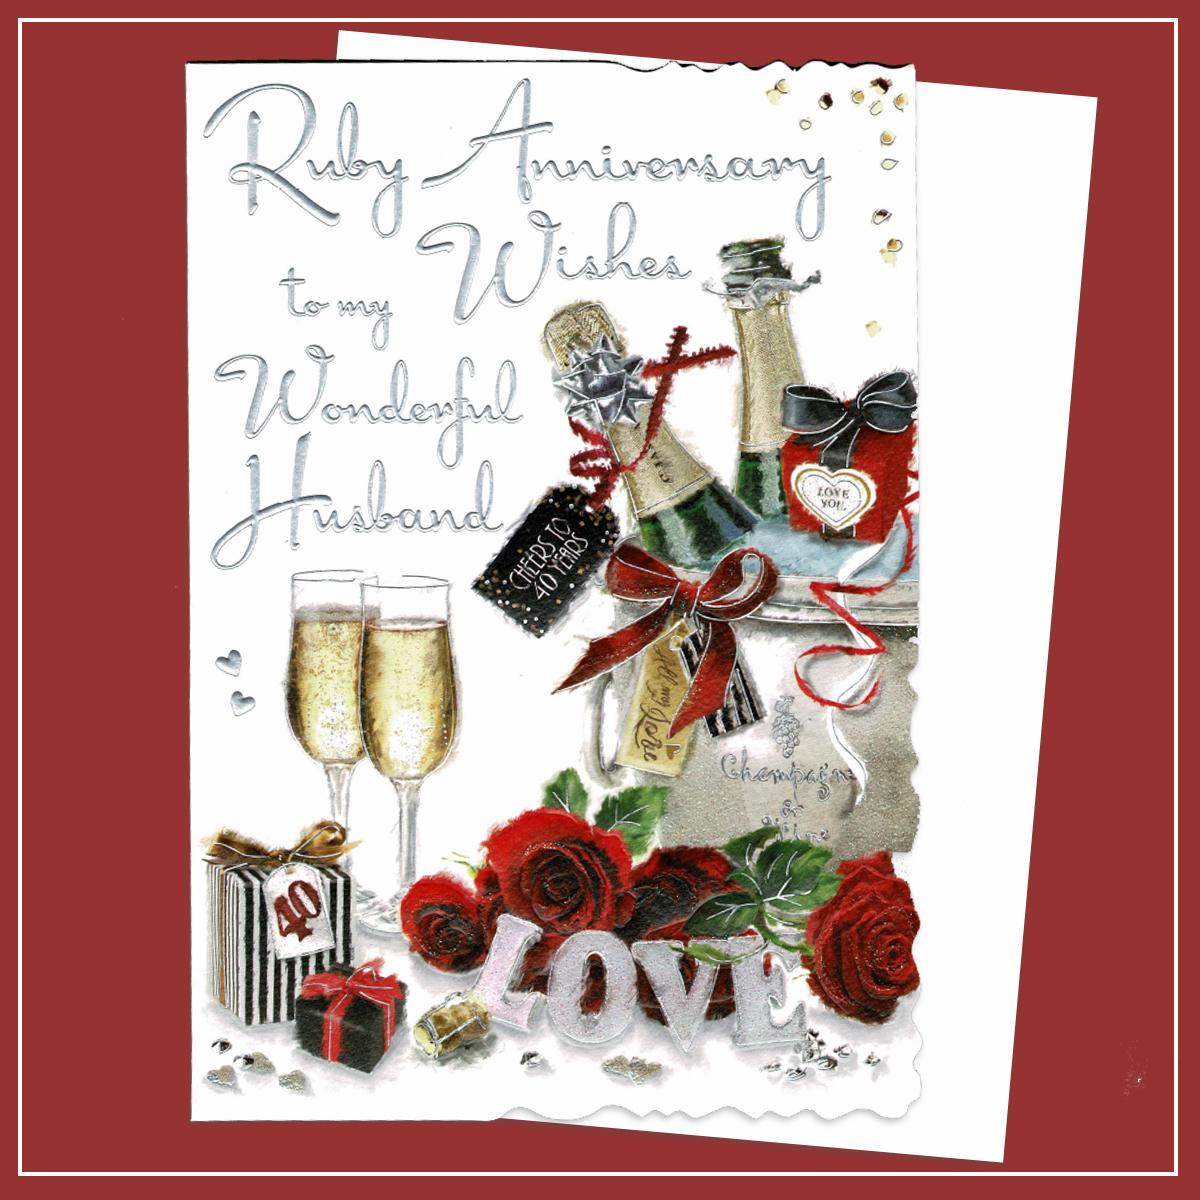 Husband Ruby Anniversary Card Alongside Its White Envelope